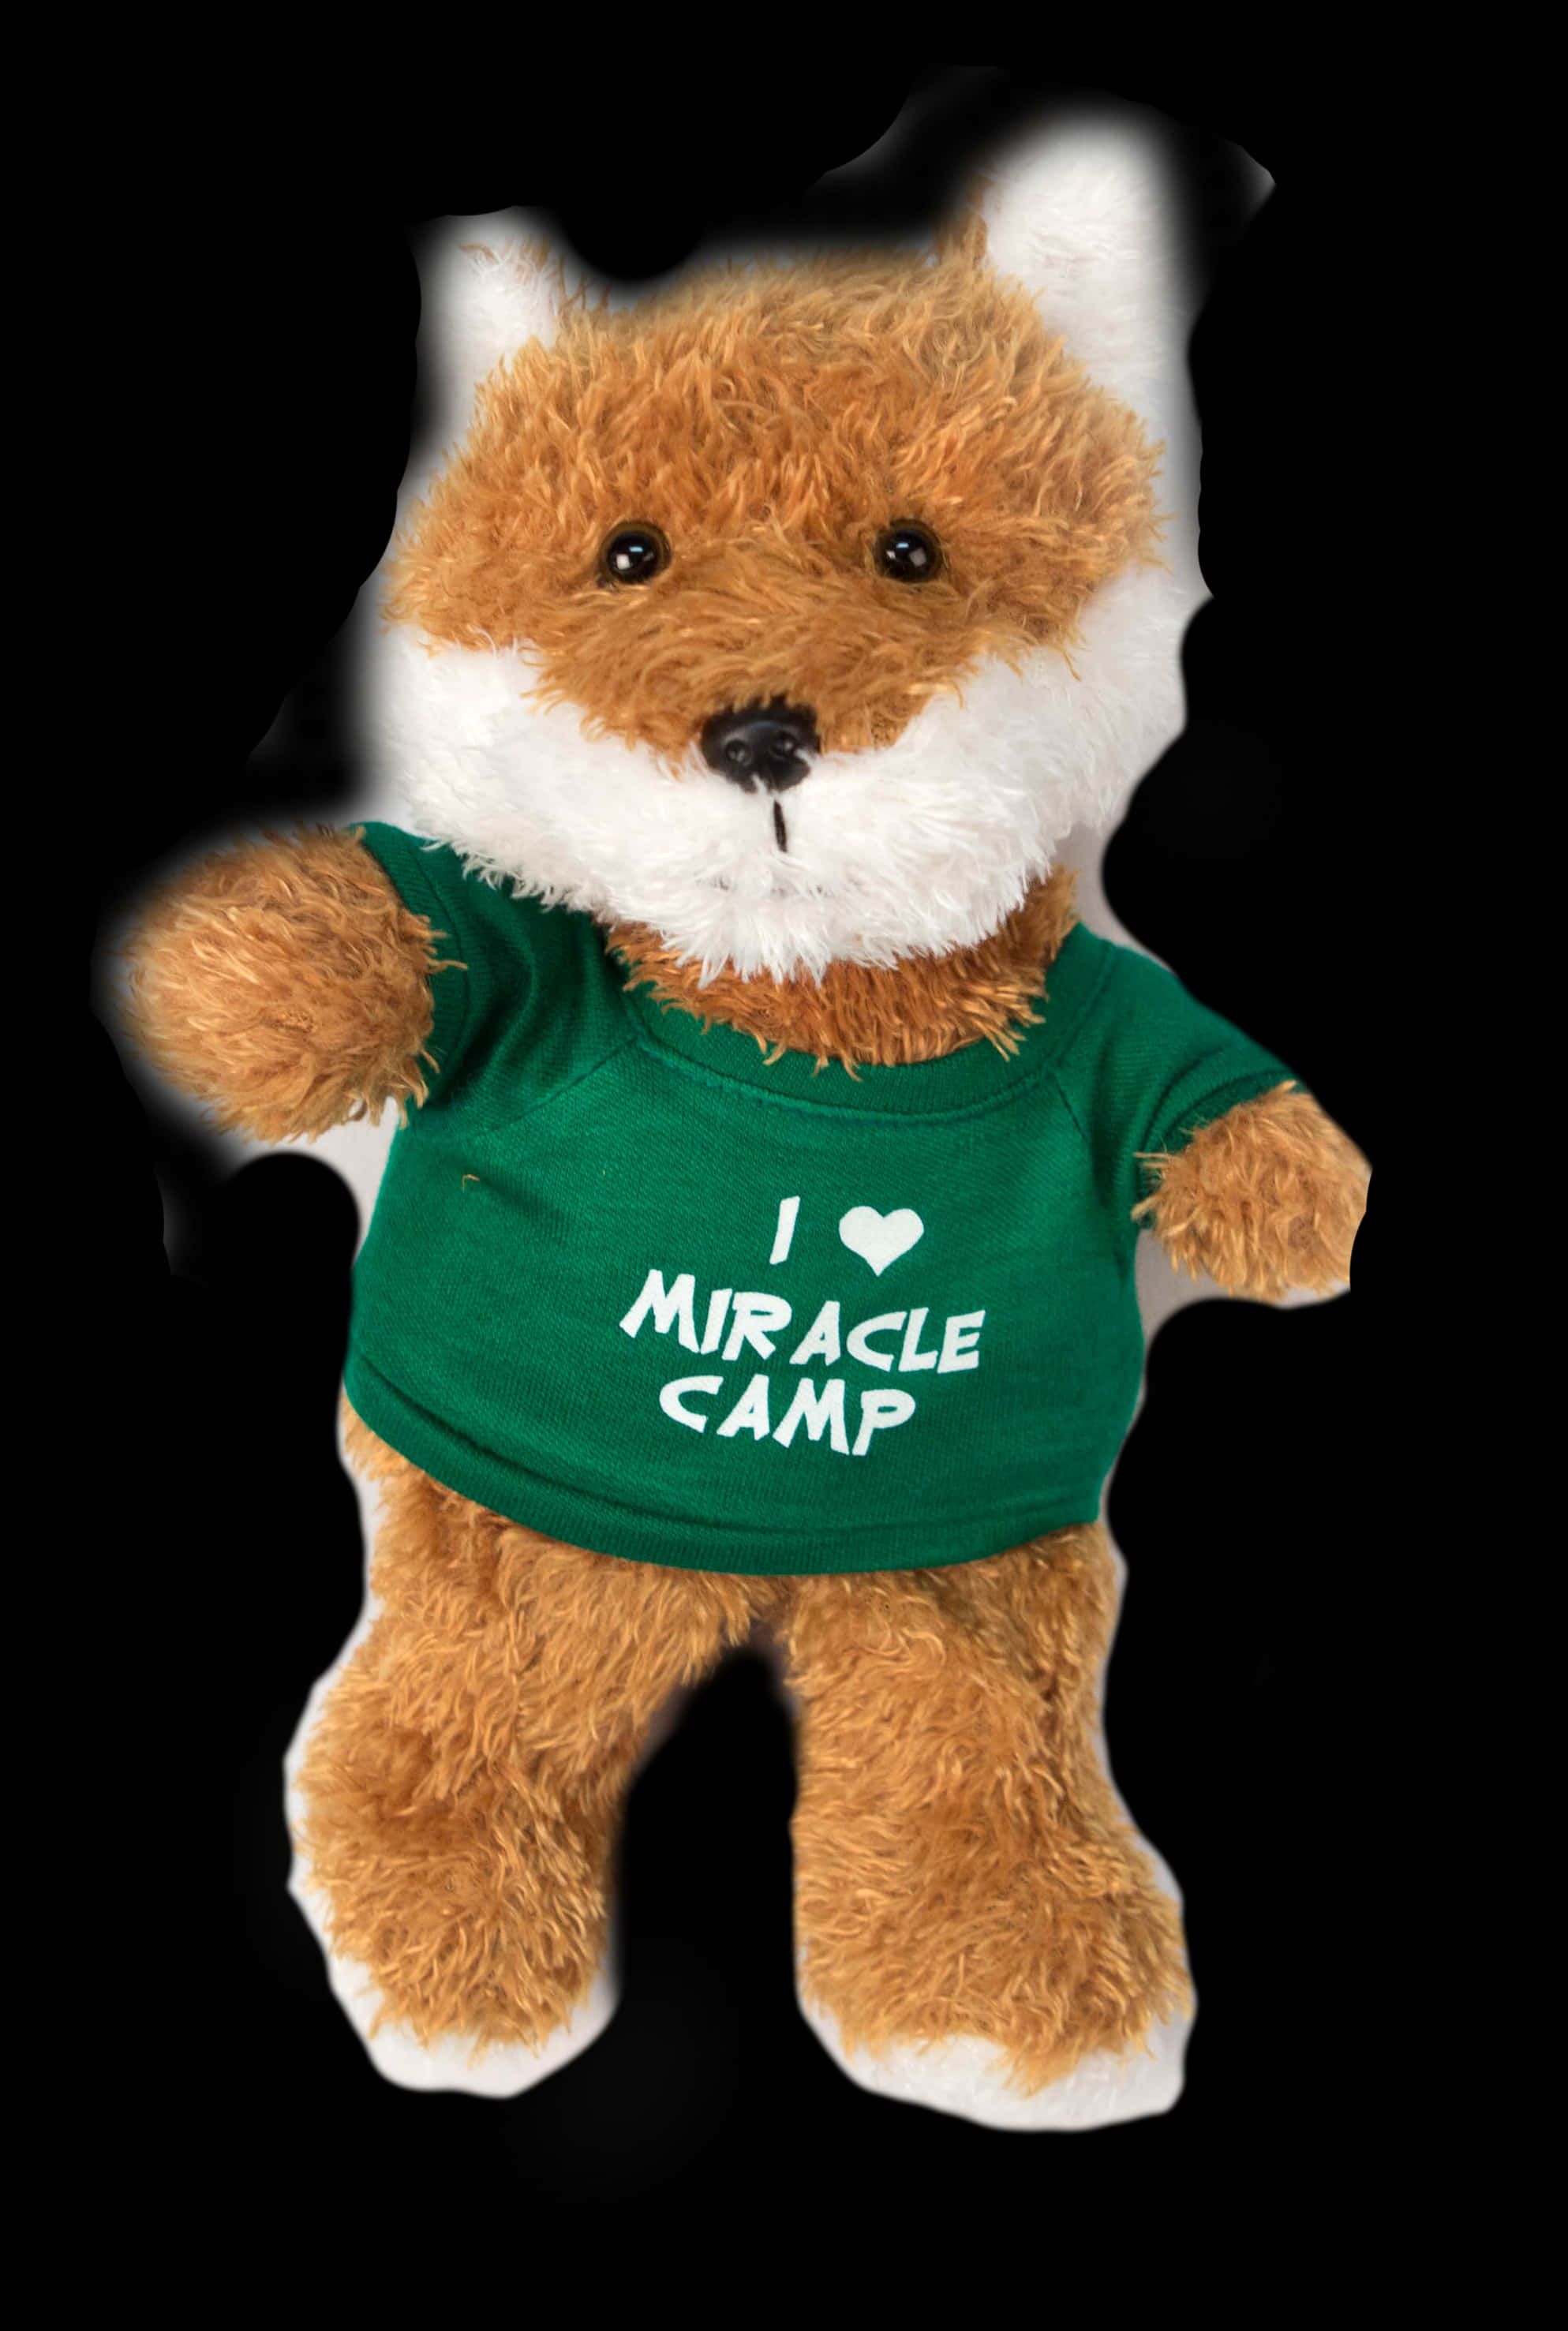 A Stuffed Animal Wearing A Green Shirt